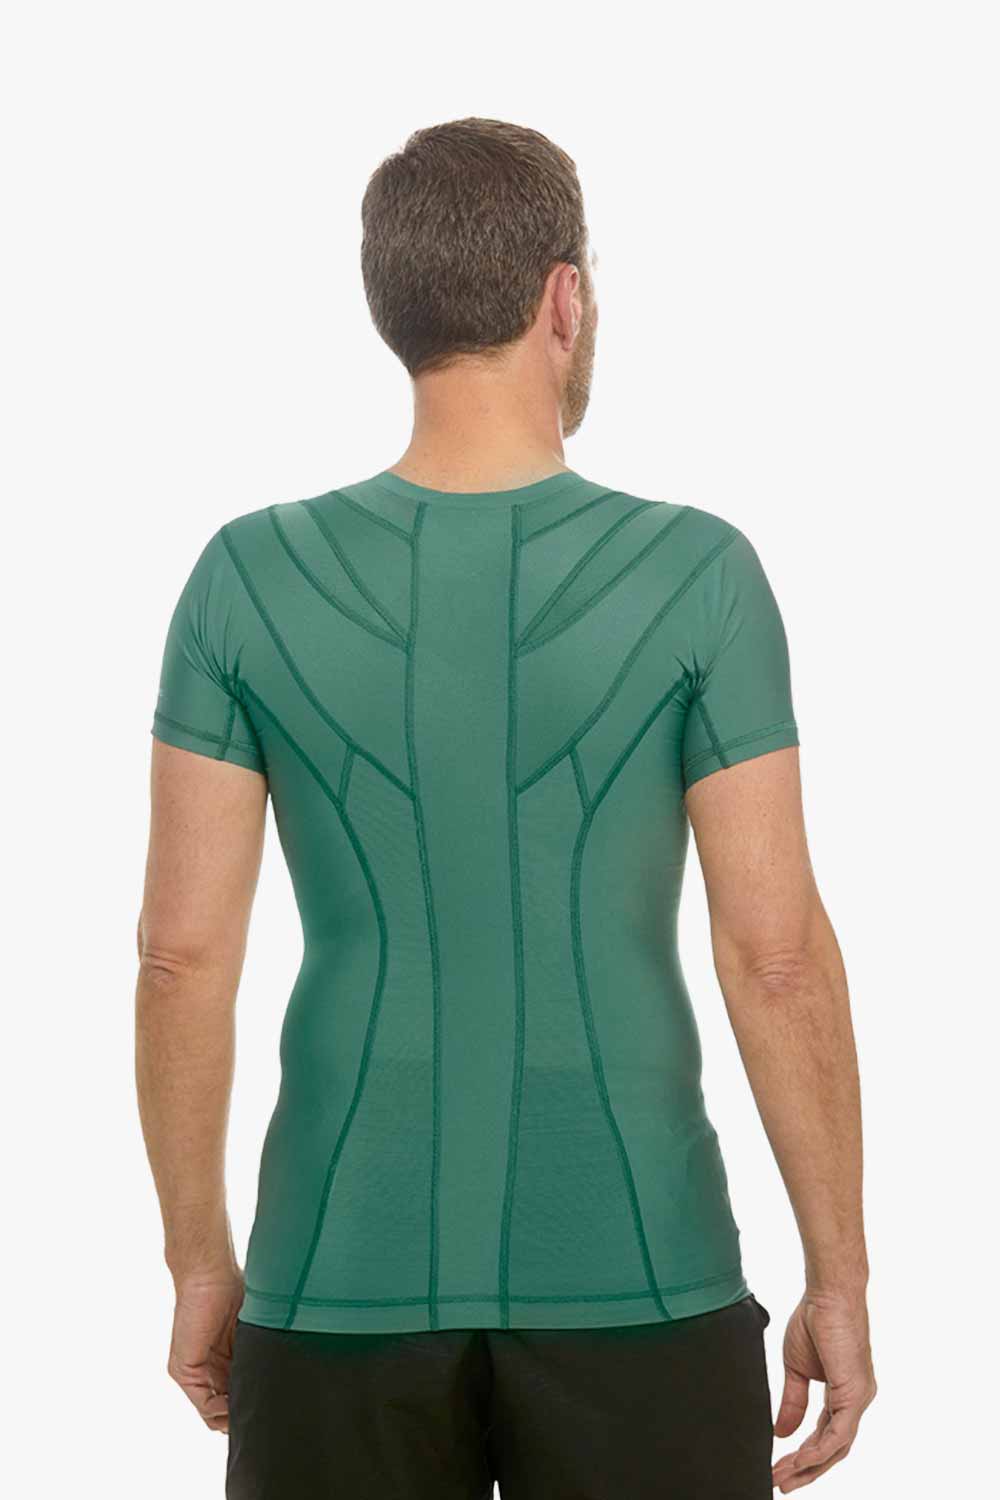 'Men''s Posture Shirt™ - Grün'